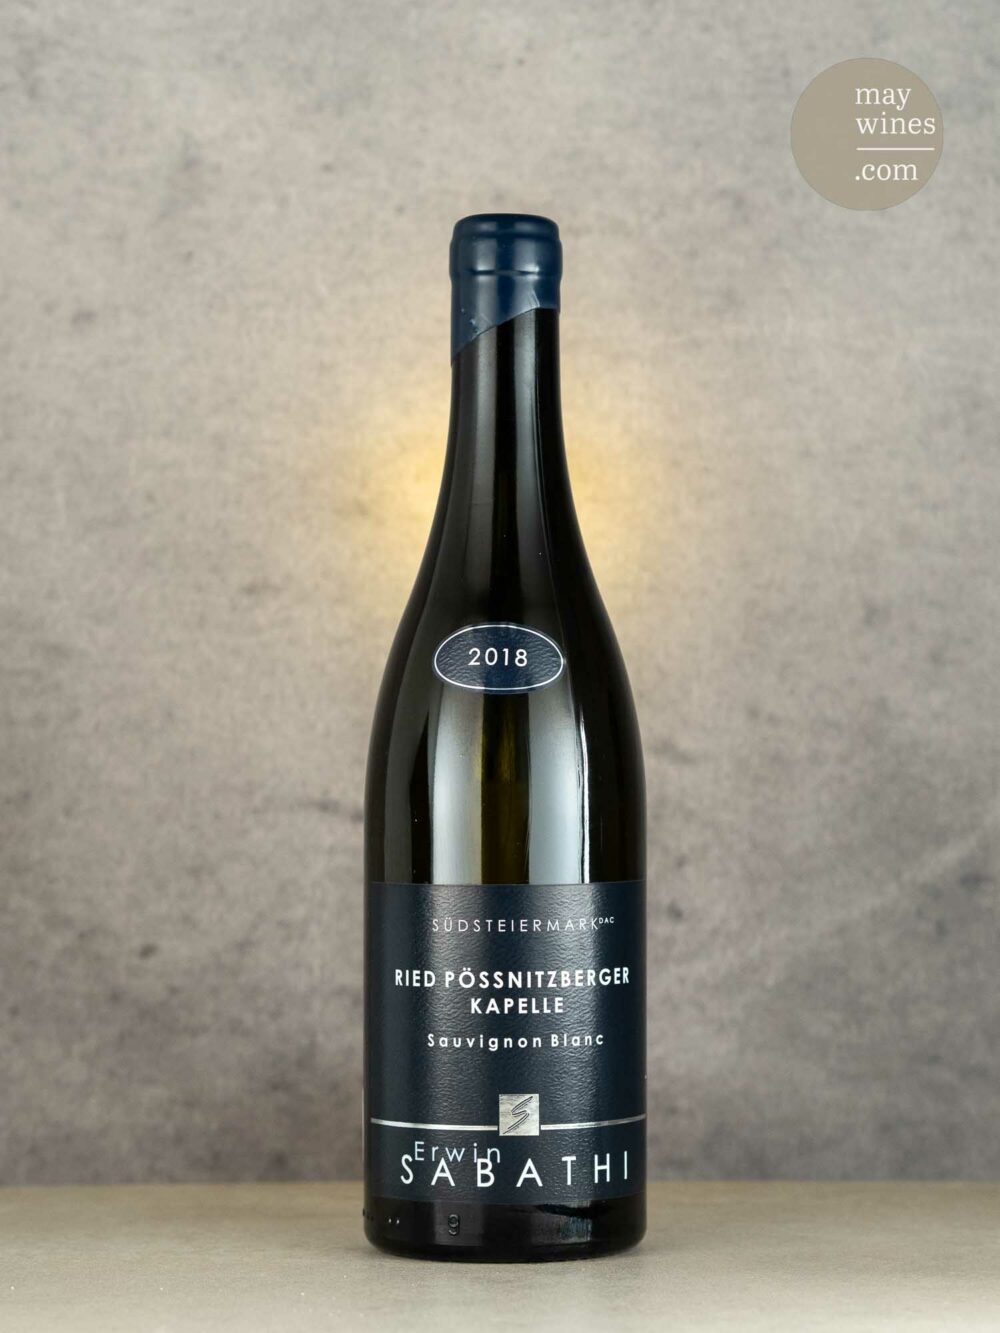 May Wines – Weißwein – 2018 Pössnitzberger Kapelle Sauvignon Blanc - Weingut Erwin Sabathi